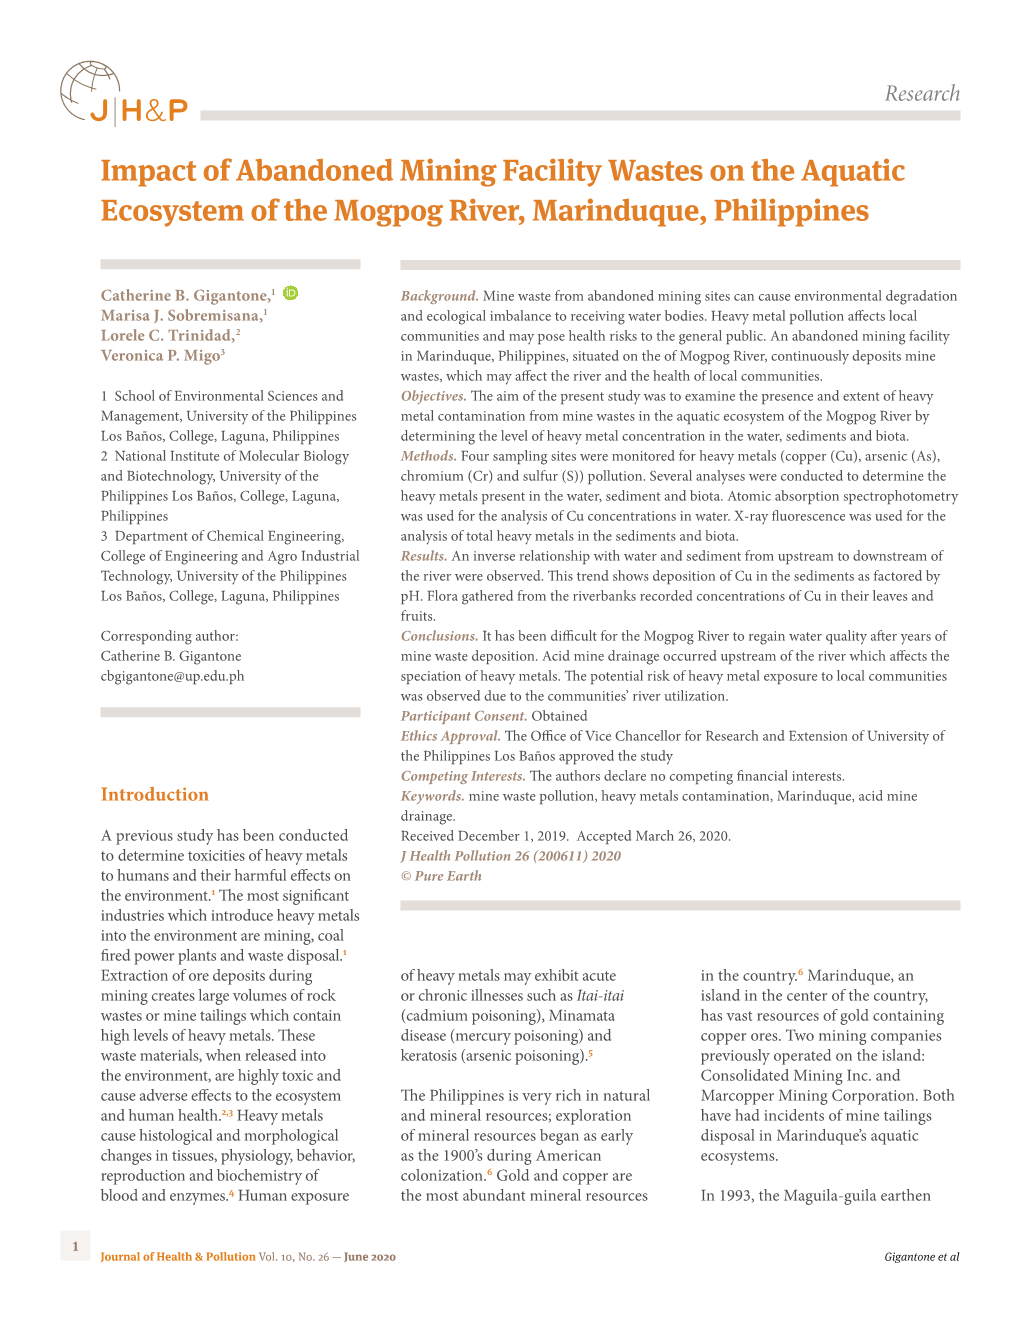 Impact of Abandoned Mining Facility Wastes on the Aquatic Ecosystem of the Mogpog River, Marinduque, Philippines